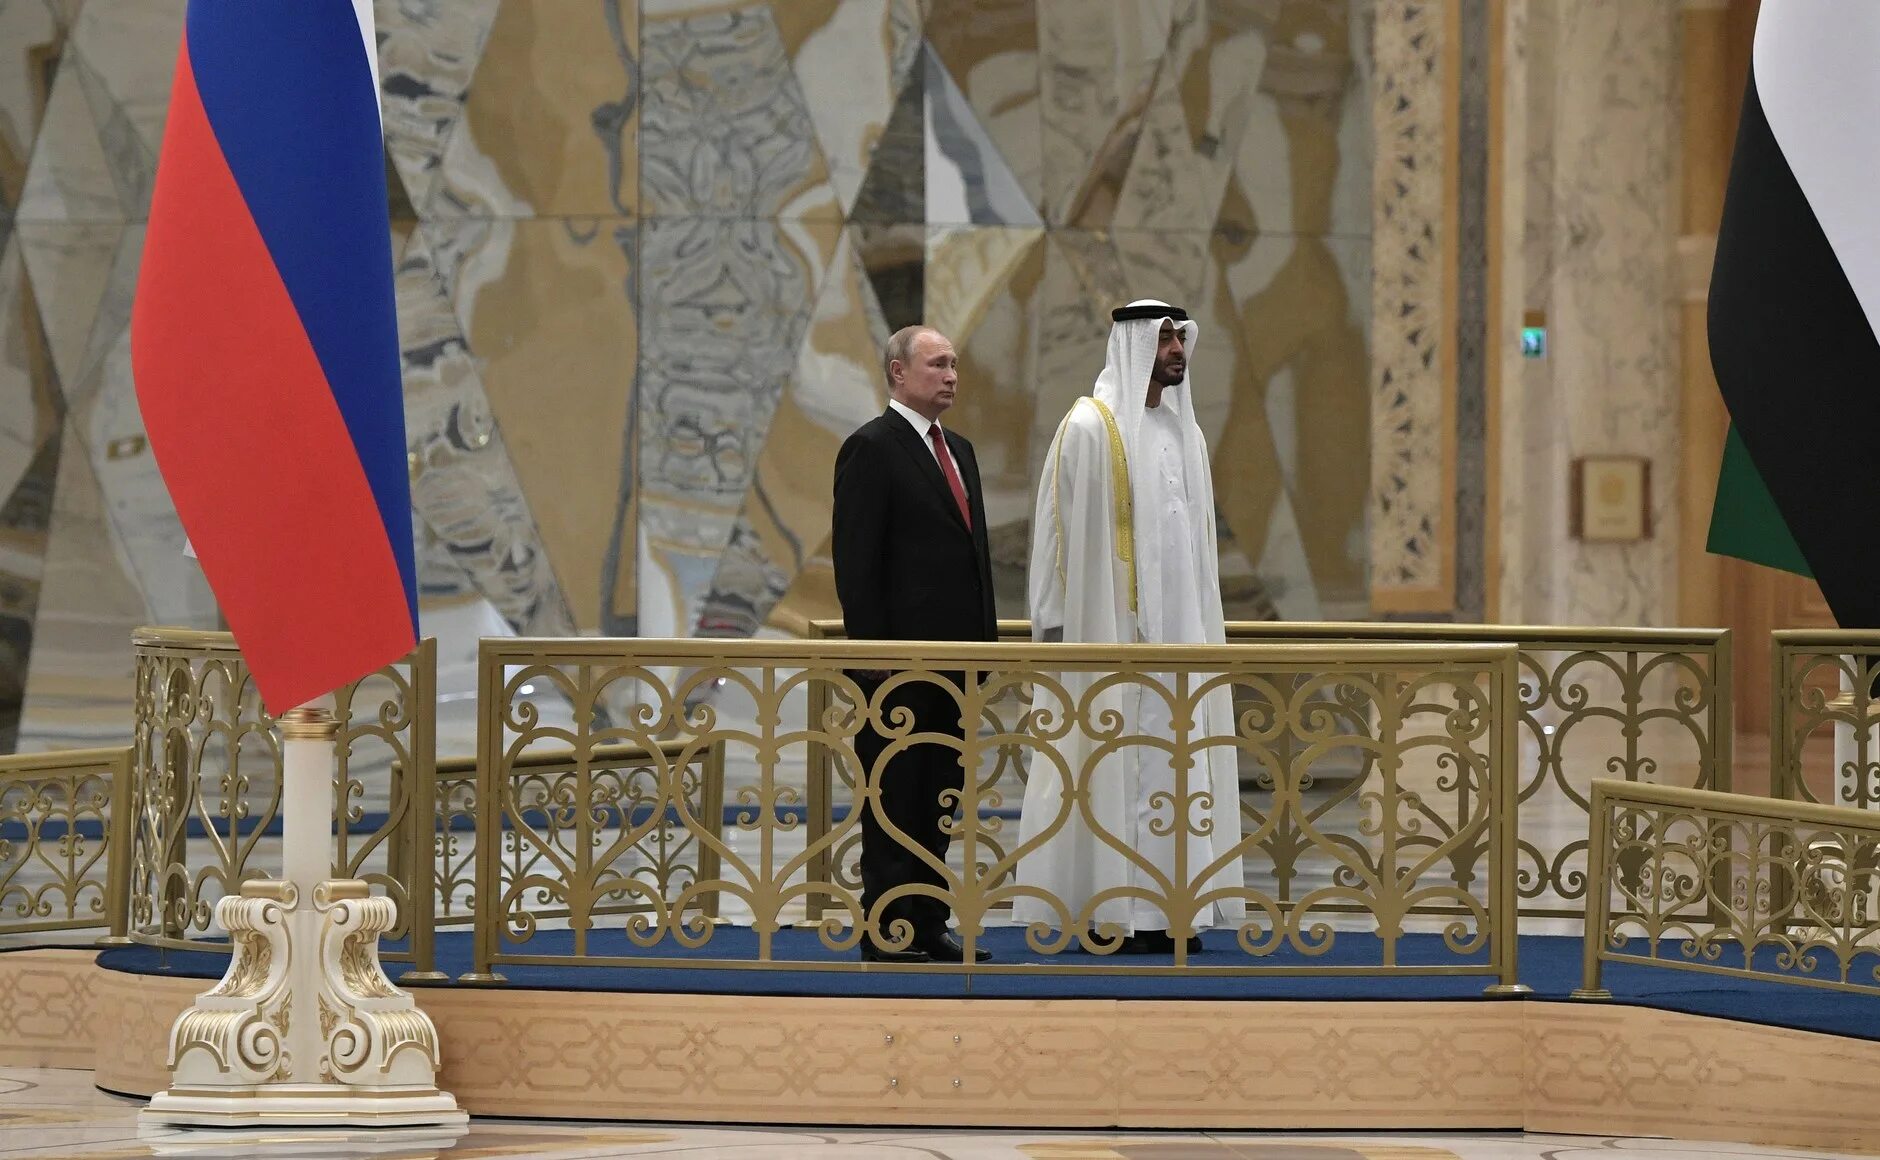 Внешняя политика арабских. Визит президента ОАЭ В Россию 2022. Визит Путина в ОАЭ 2019. Визит Путина ваубдаби.